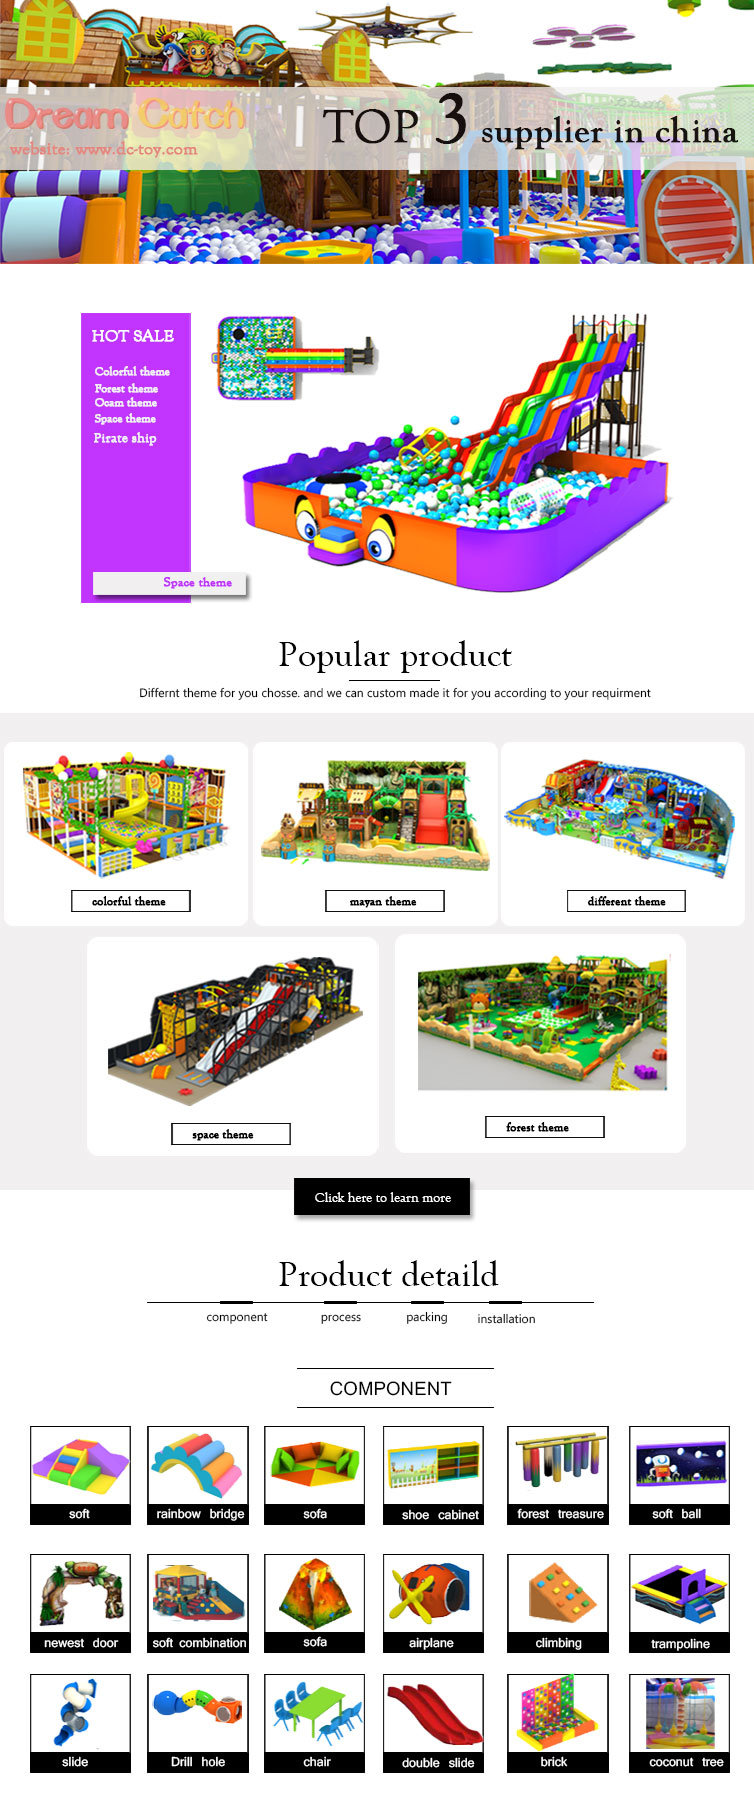 Big Fiberglass Slide for Kids Indoor Play Maze for Shopping Mall